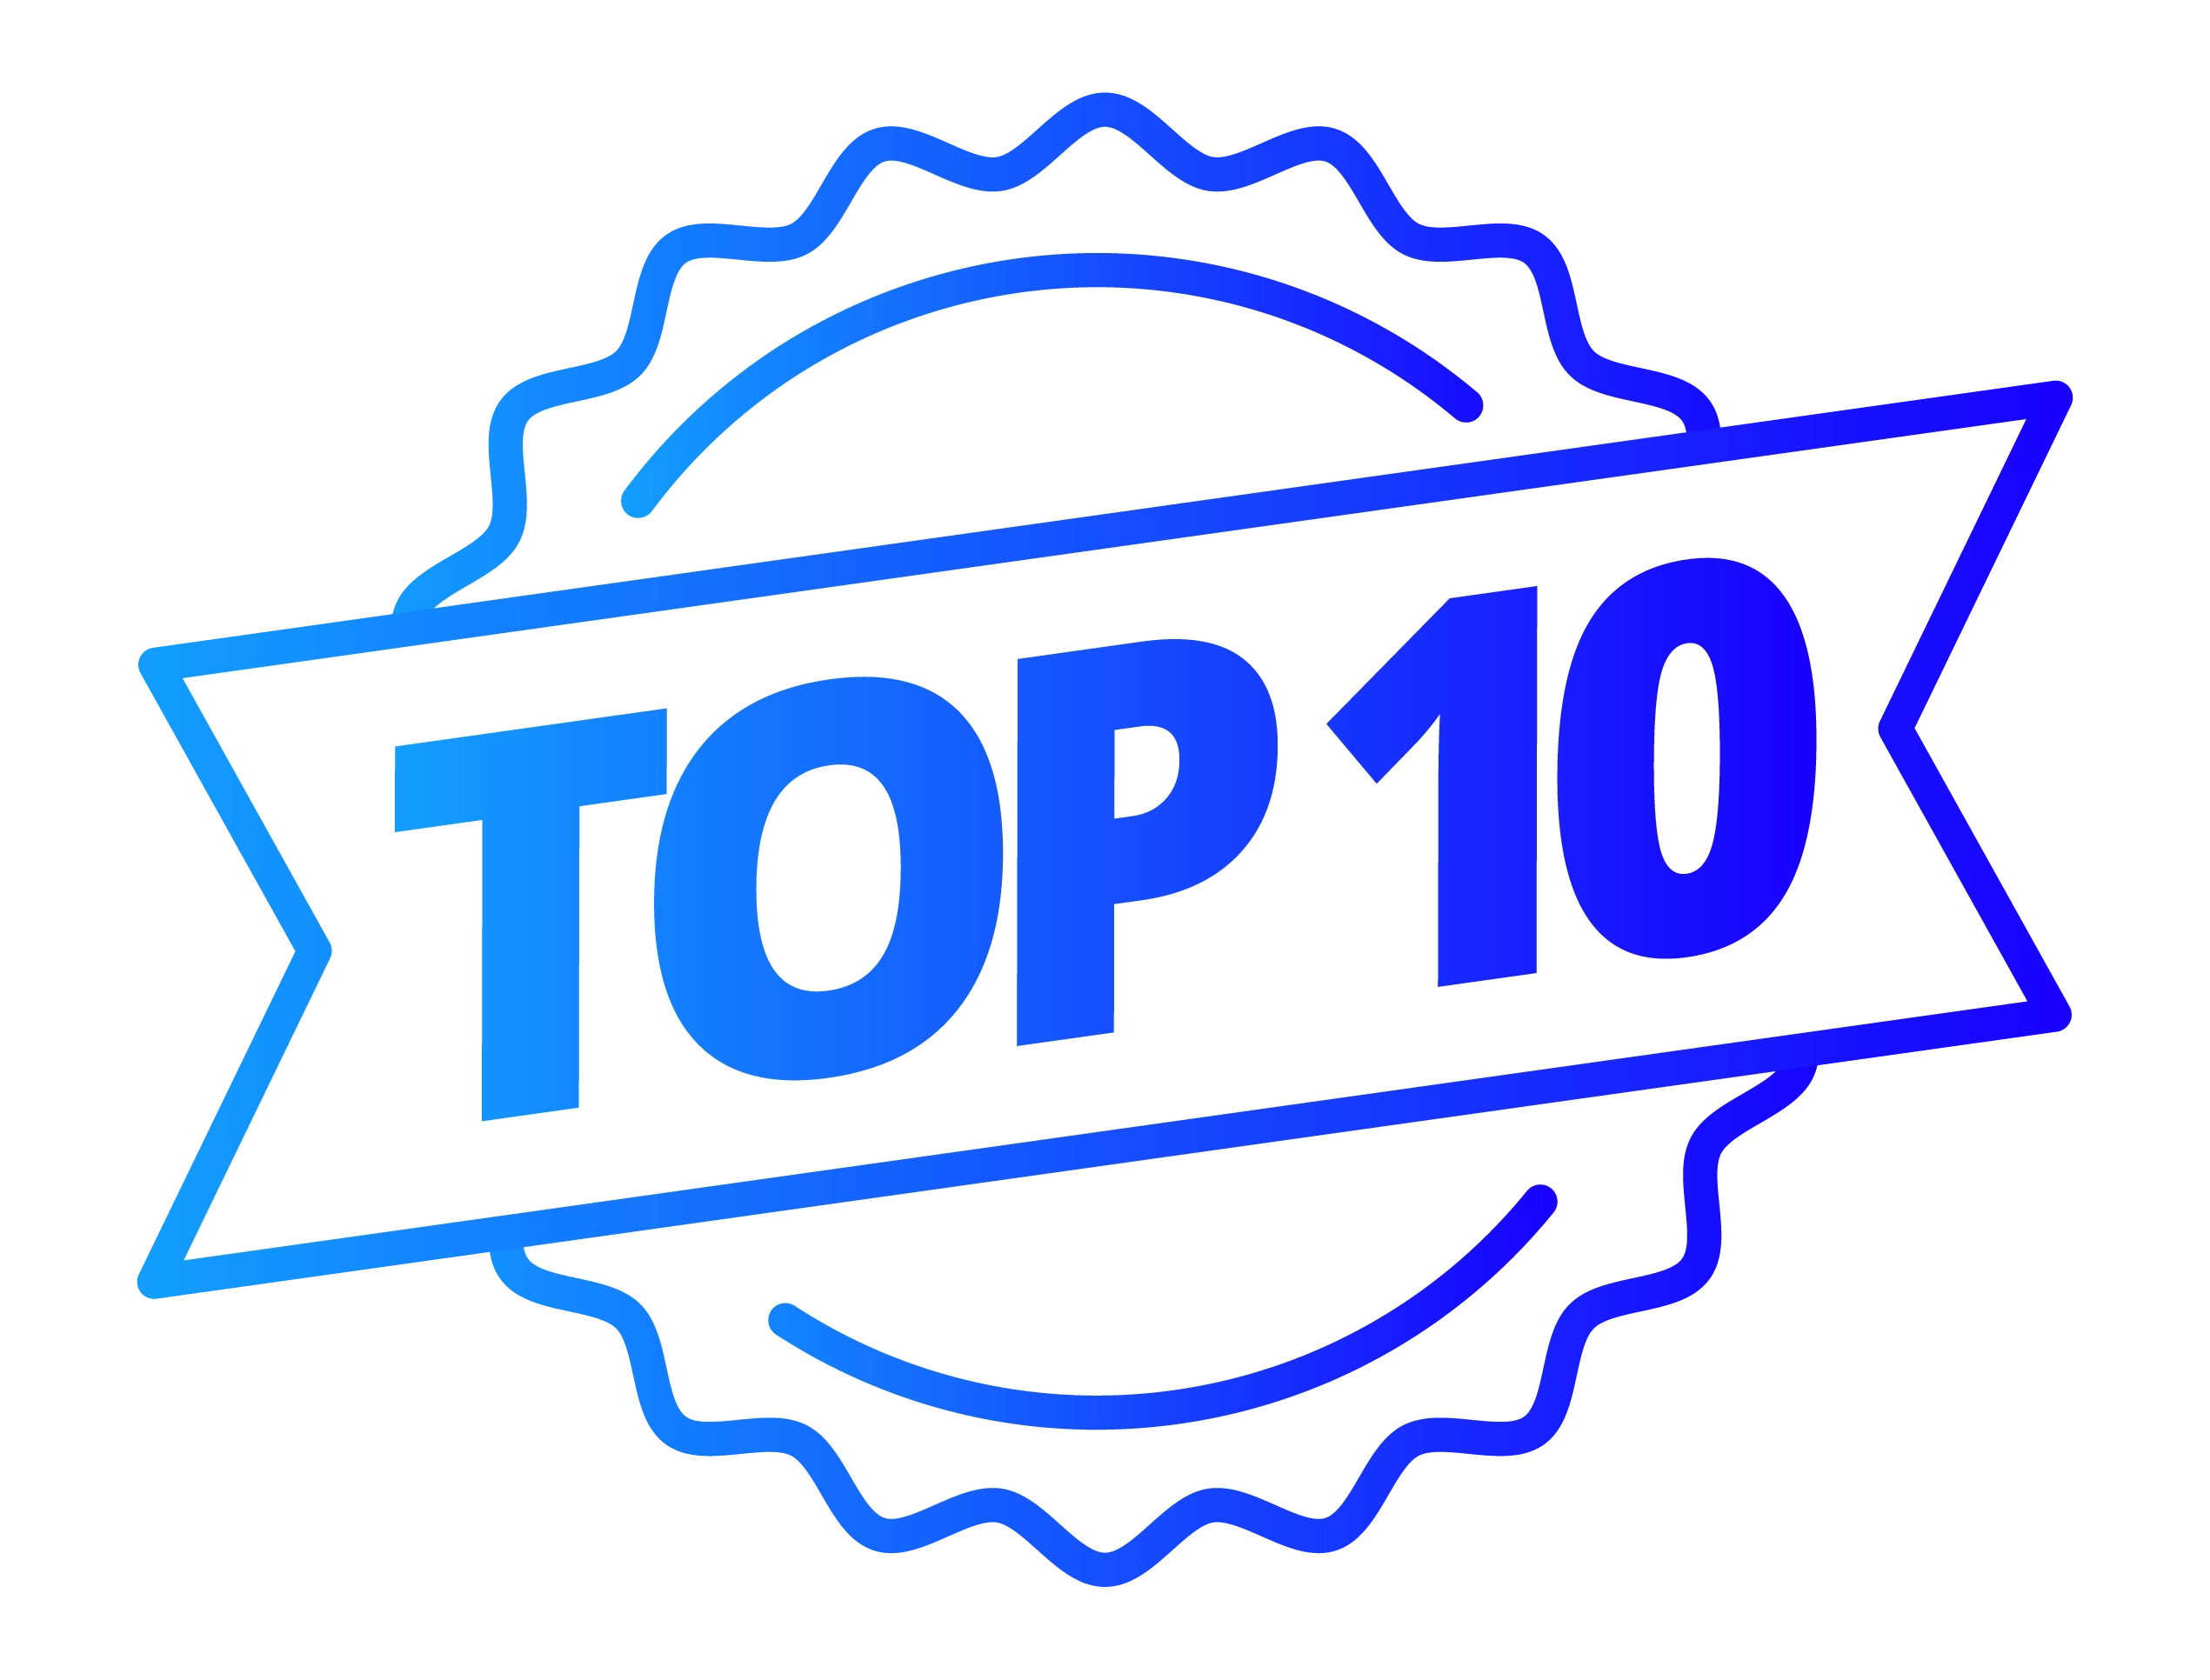 Top 10 Badge - Taylor